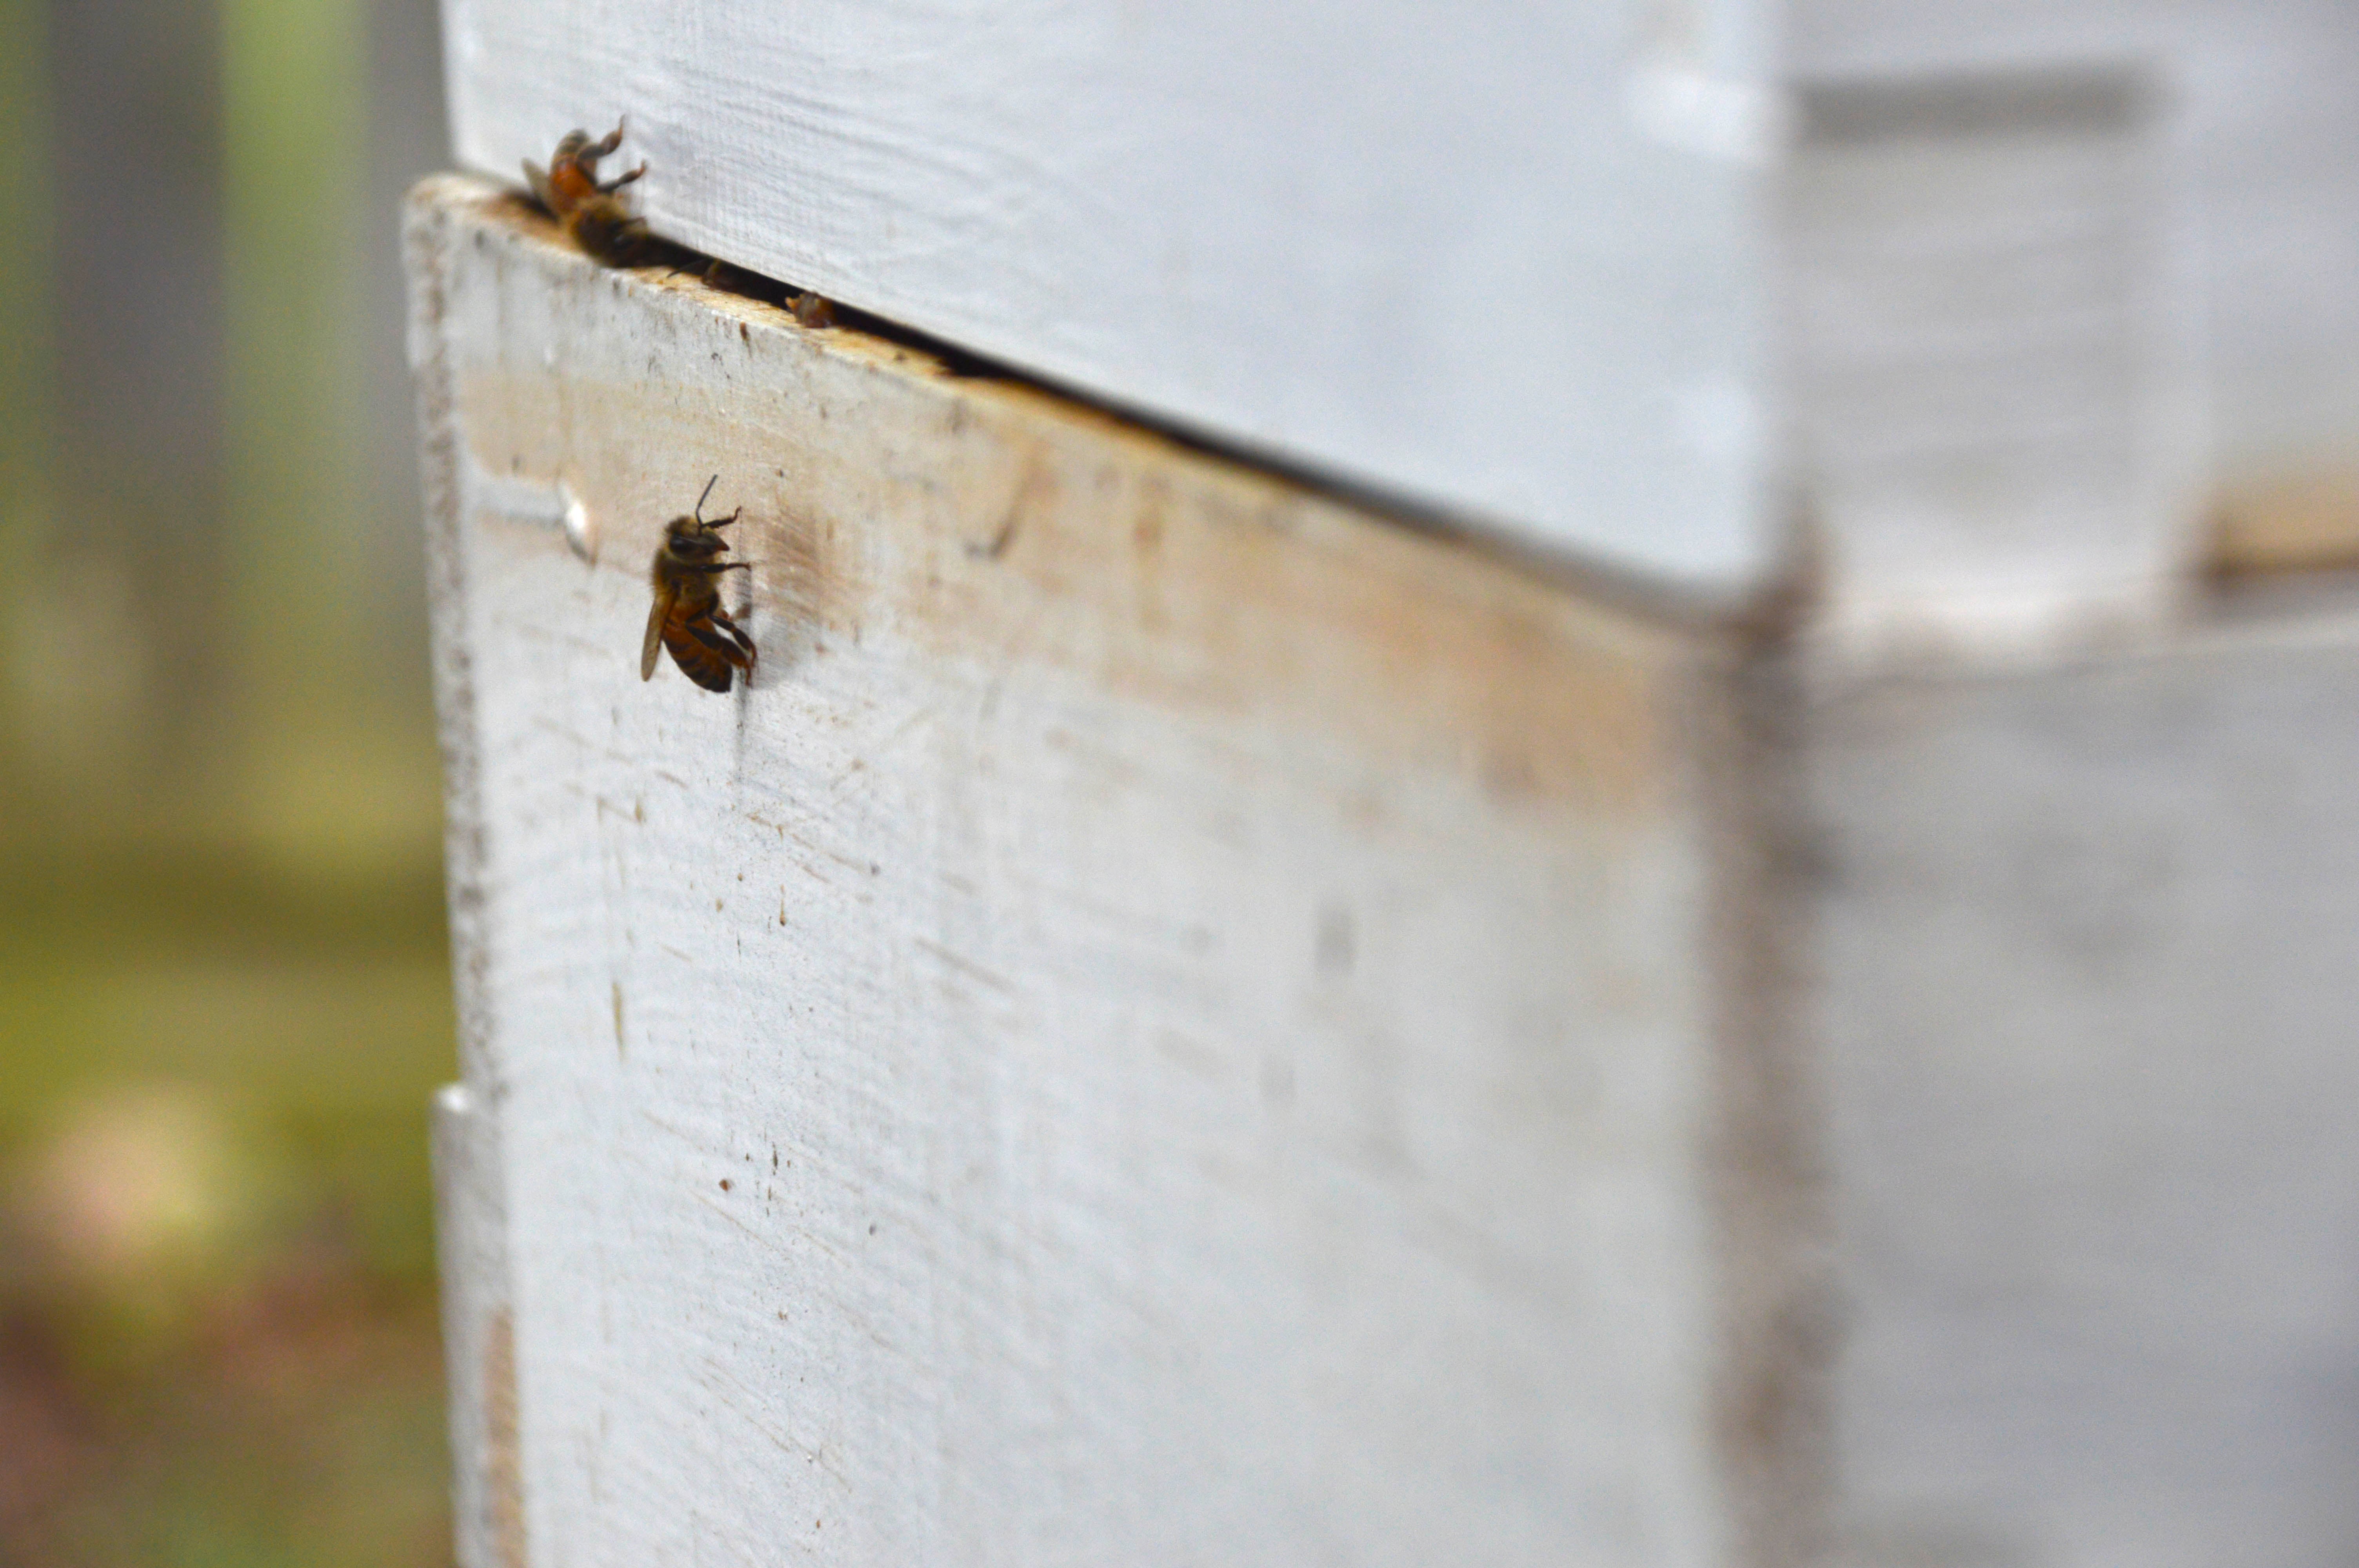 Honeybees on hive